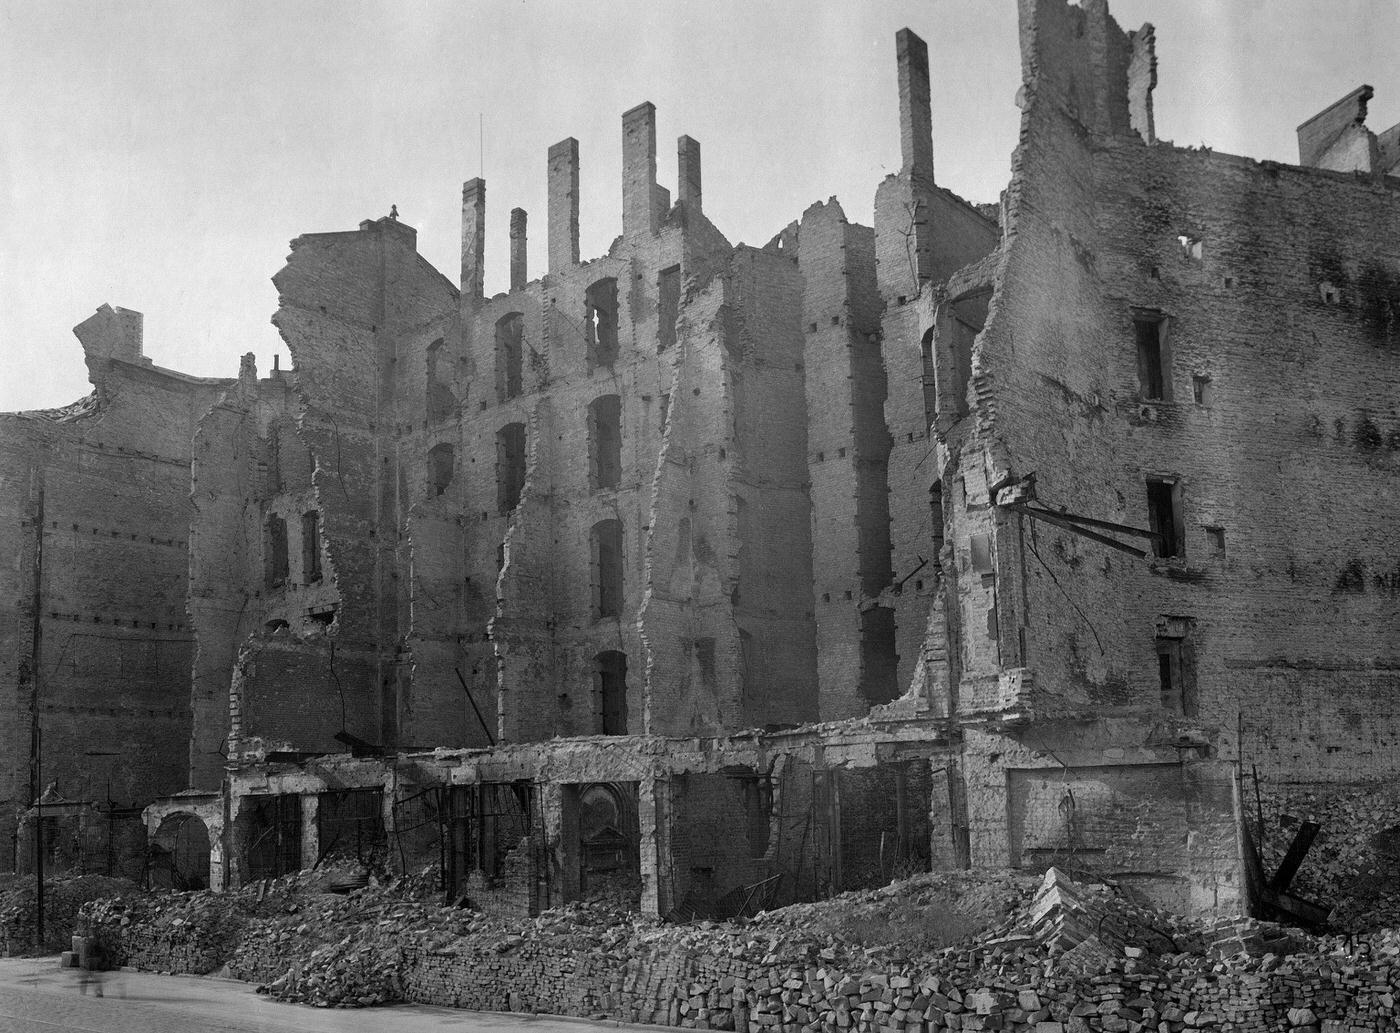 Ullstein-Verlag Berlin Kochstr, destruction during World War II.